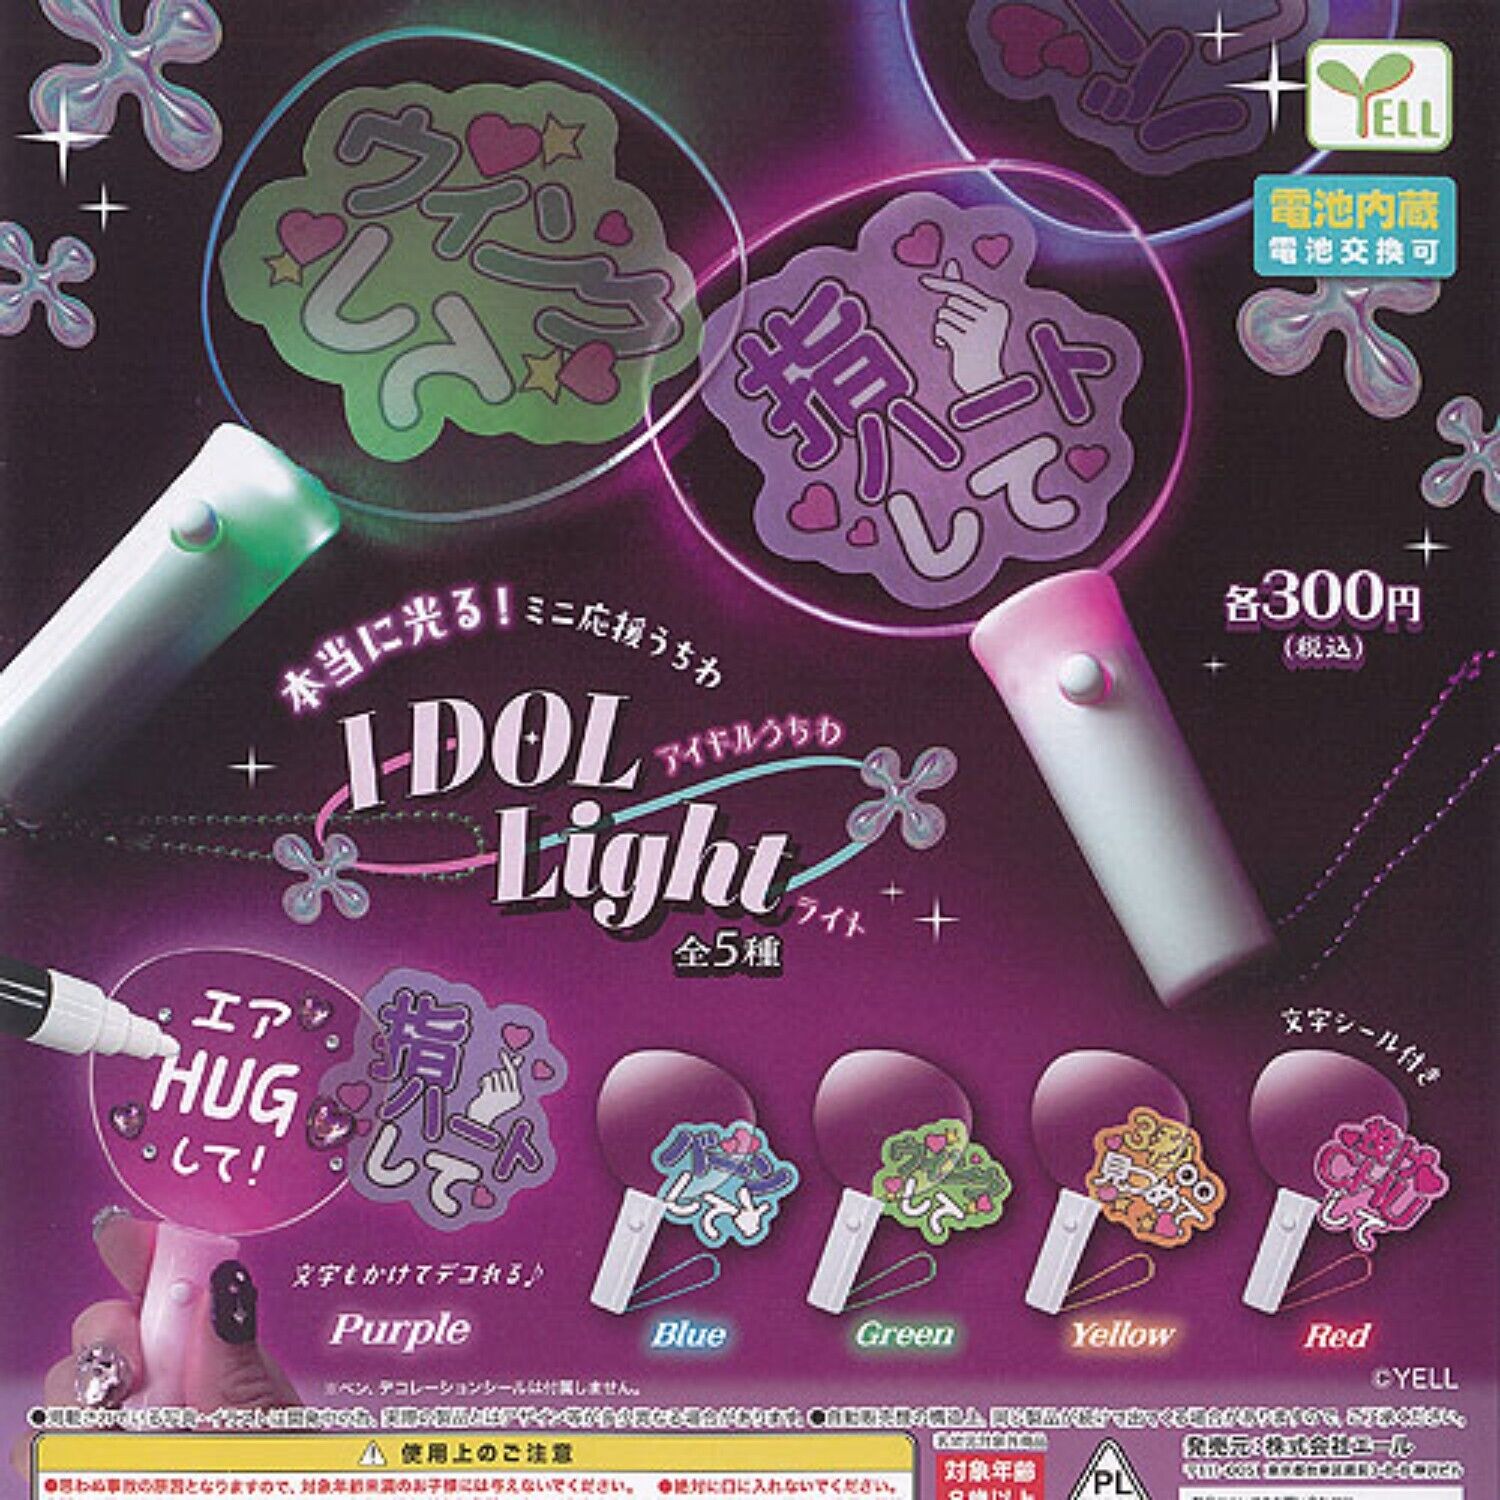 Idol Uchiwa Light Mascot Capsule Toy 5 Types Full Comp Set Gacha New Japan